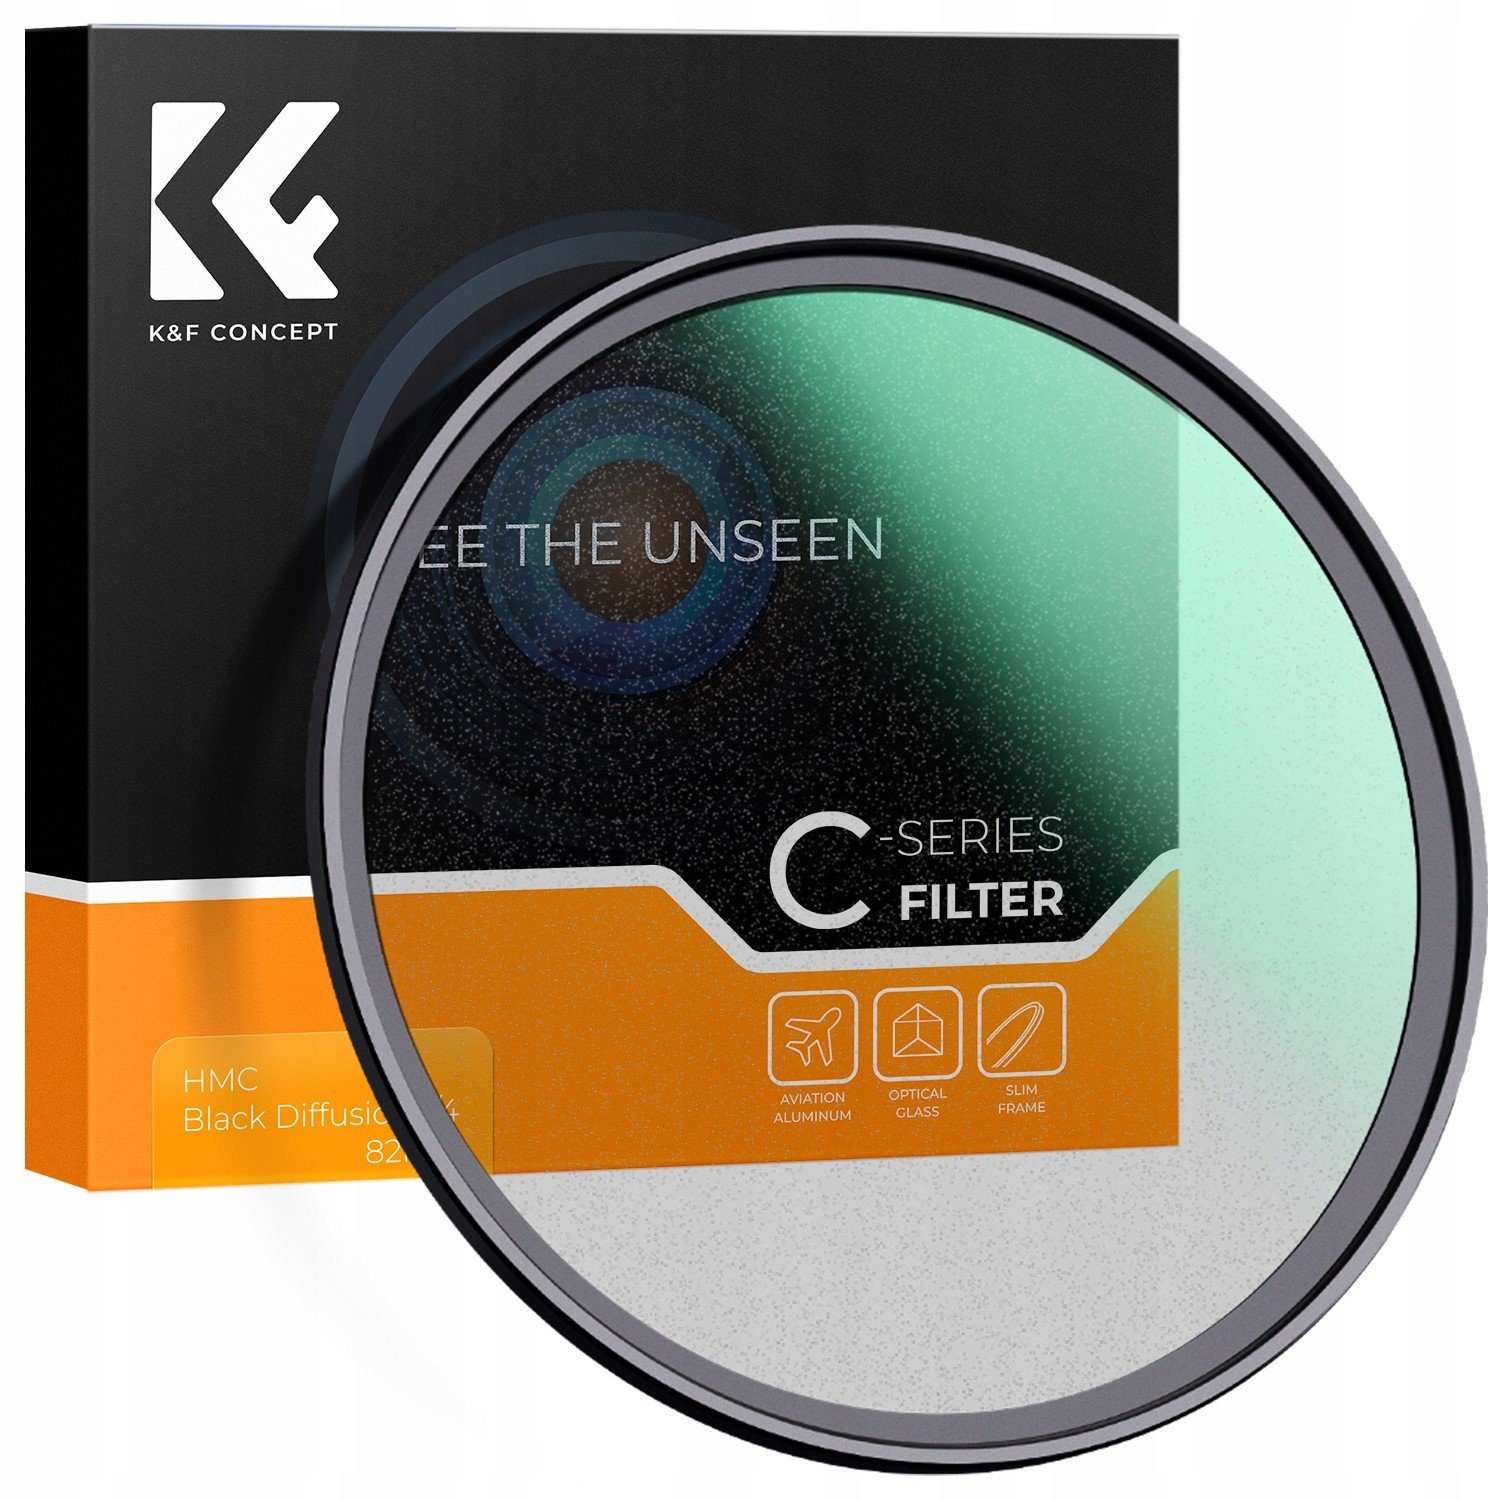 Difuzní filtr Black Mist 1/4 52mm Nano-C K&f